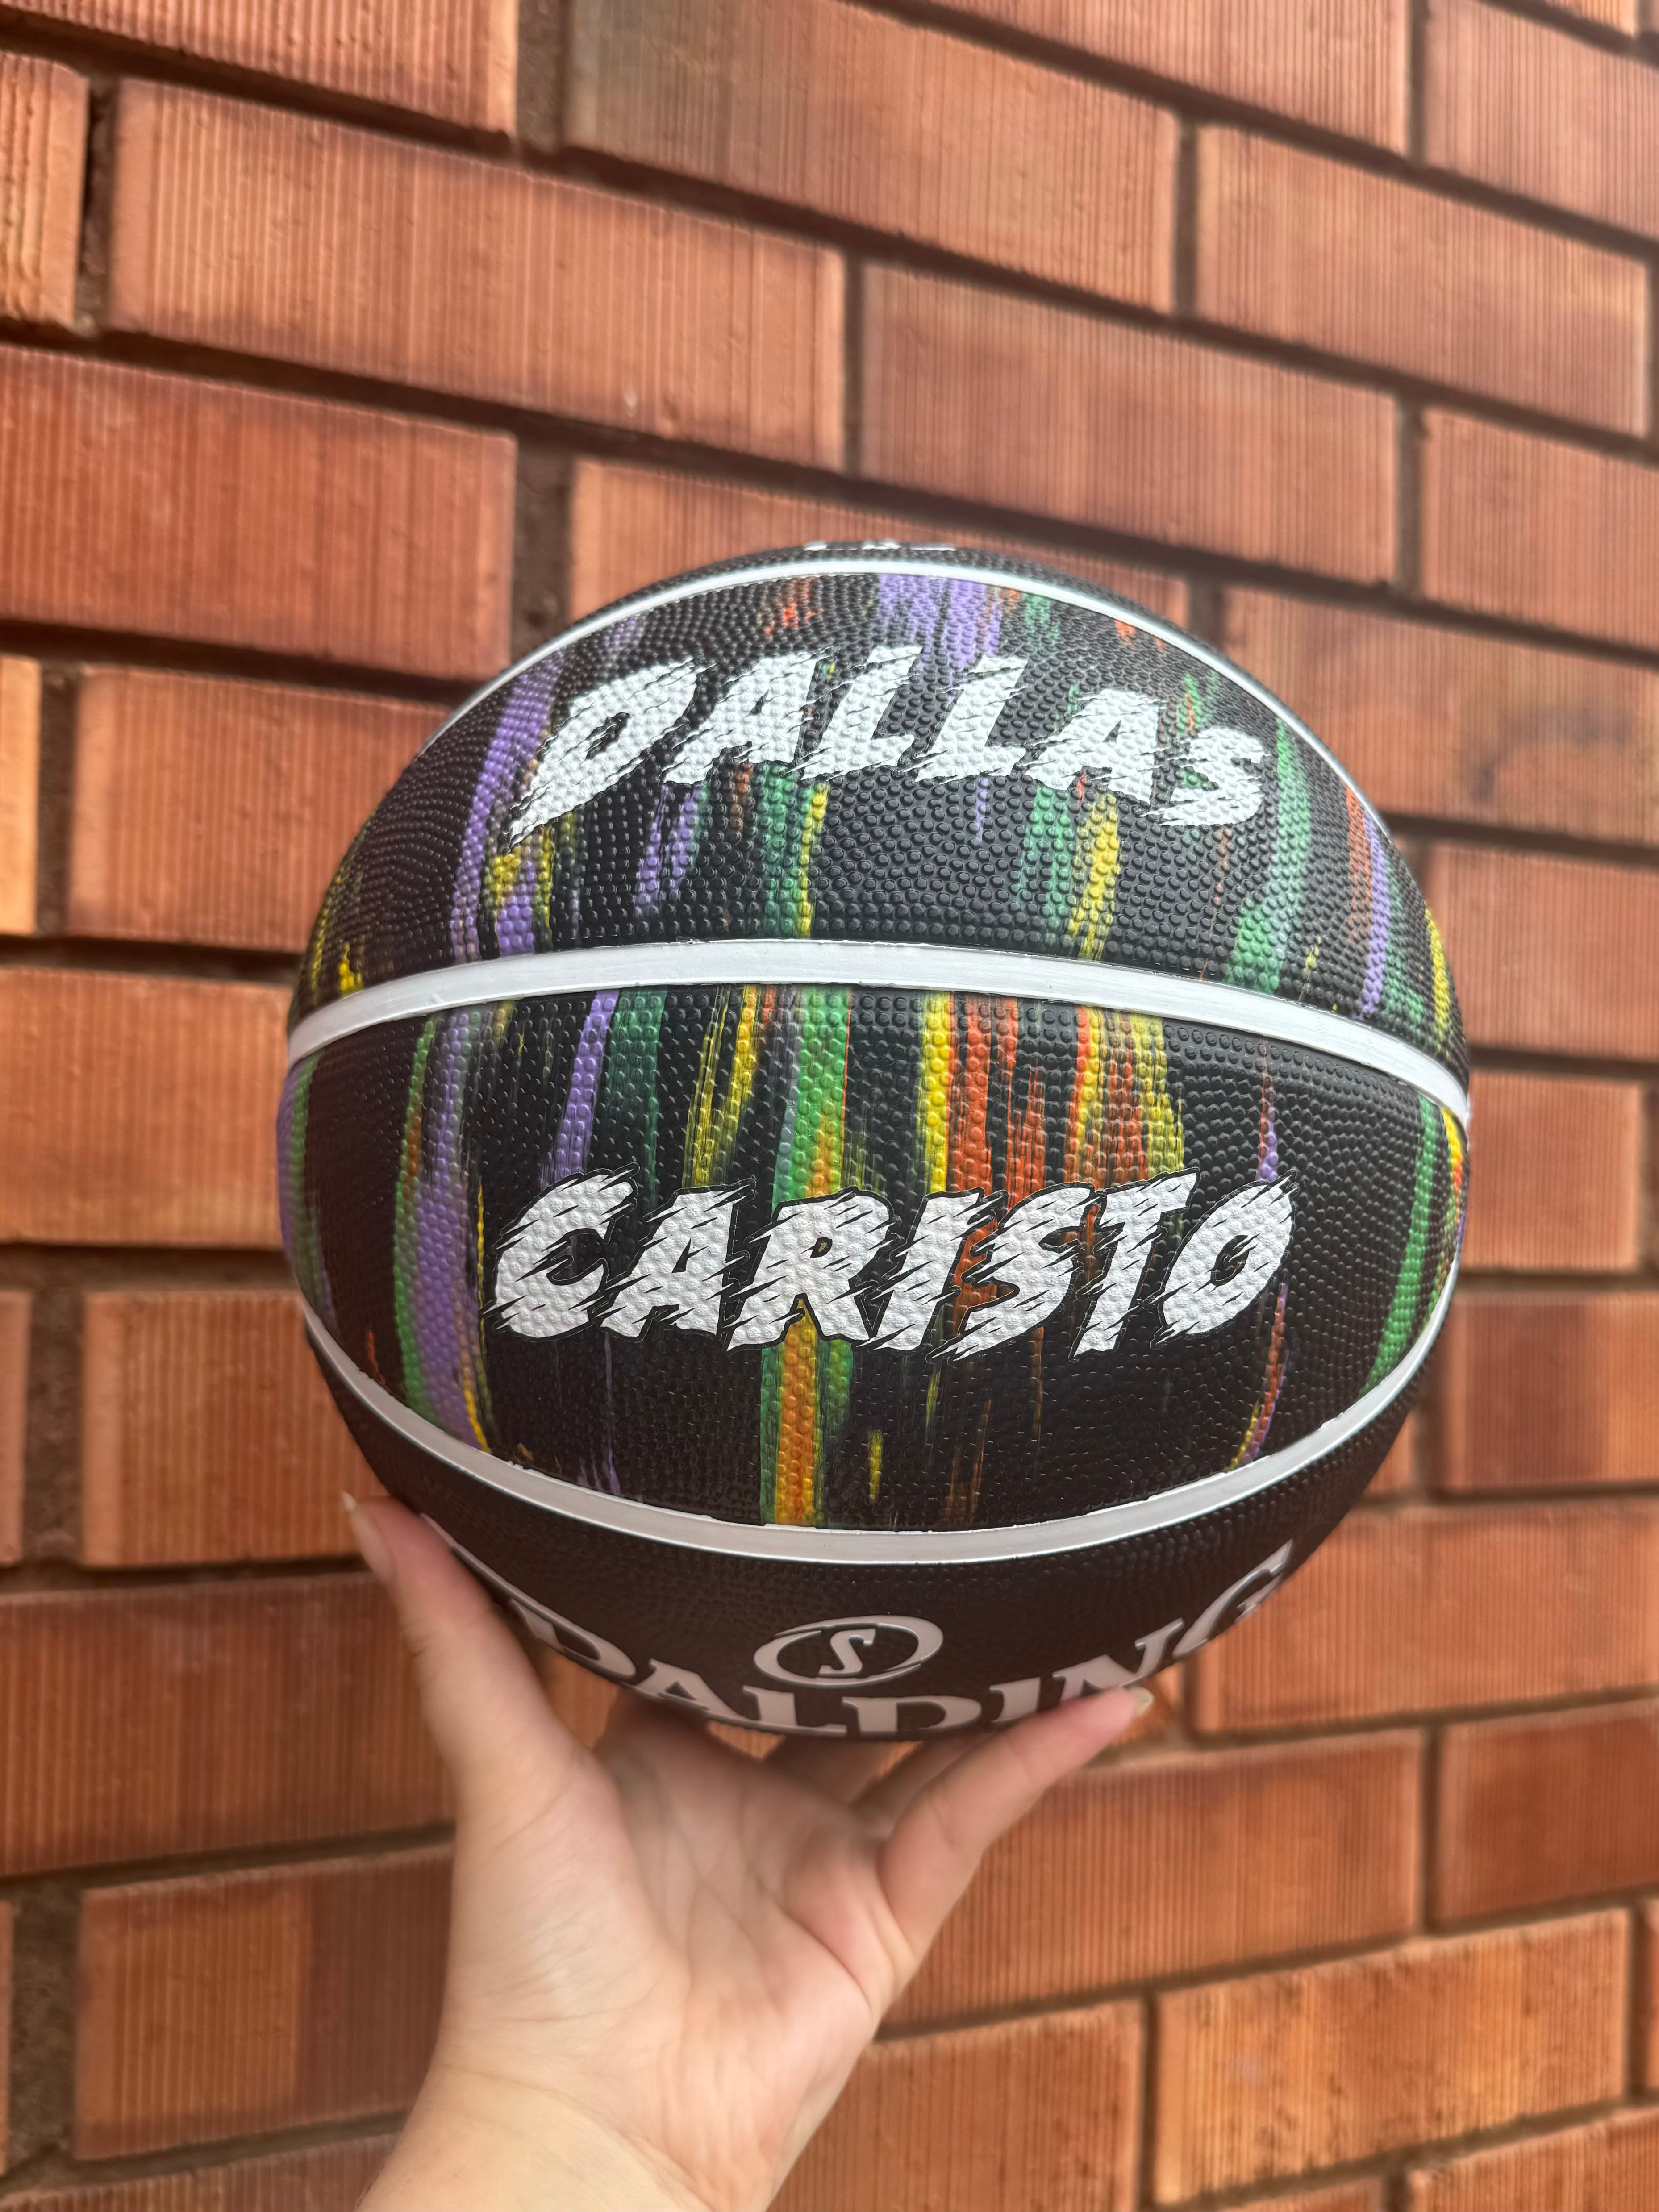 Personalised Spalding Black Marble Basketball (Size 5, 6, 7)